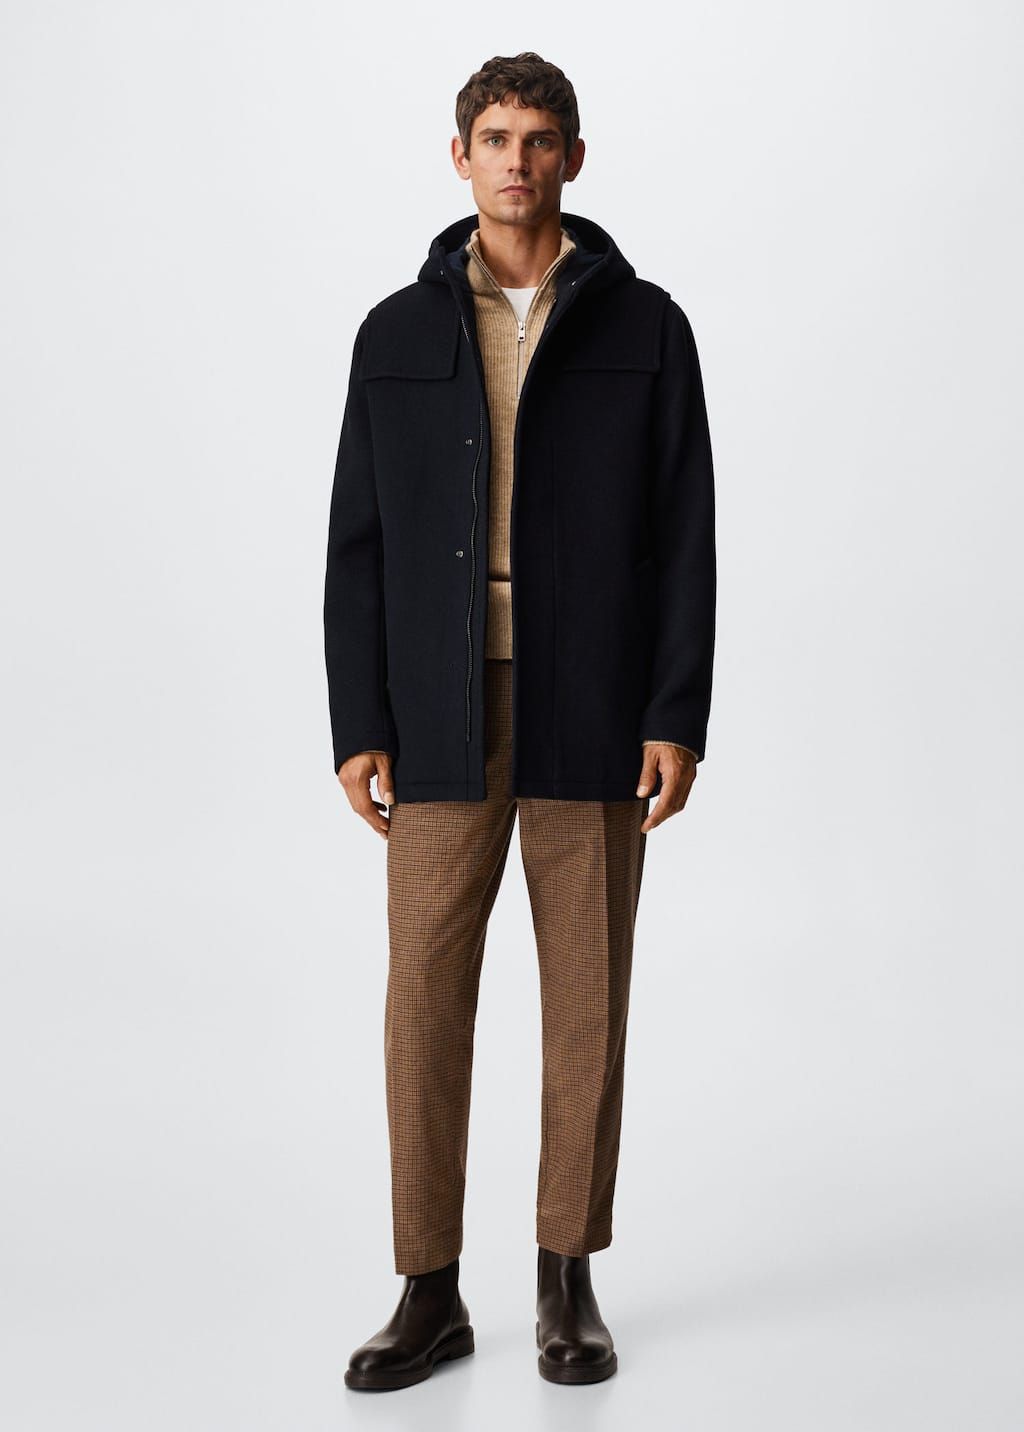 WULFUL Men's Slim Fit Winter Wool Coat Long Trench Coat Business Jacket |  Plaid outerwear, Mens wool coats, Overcoat men